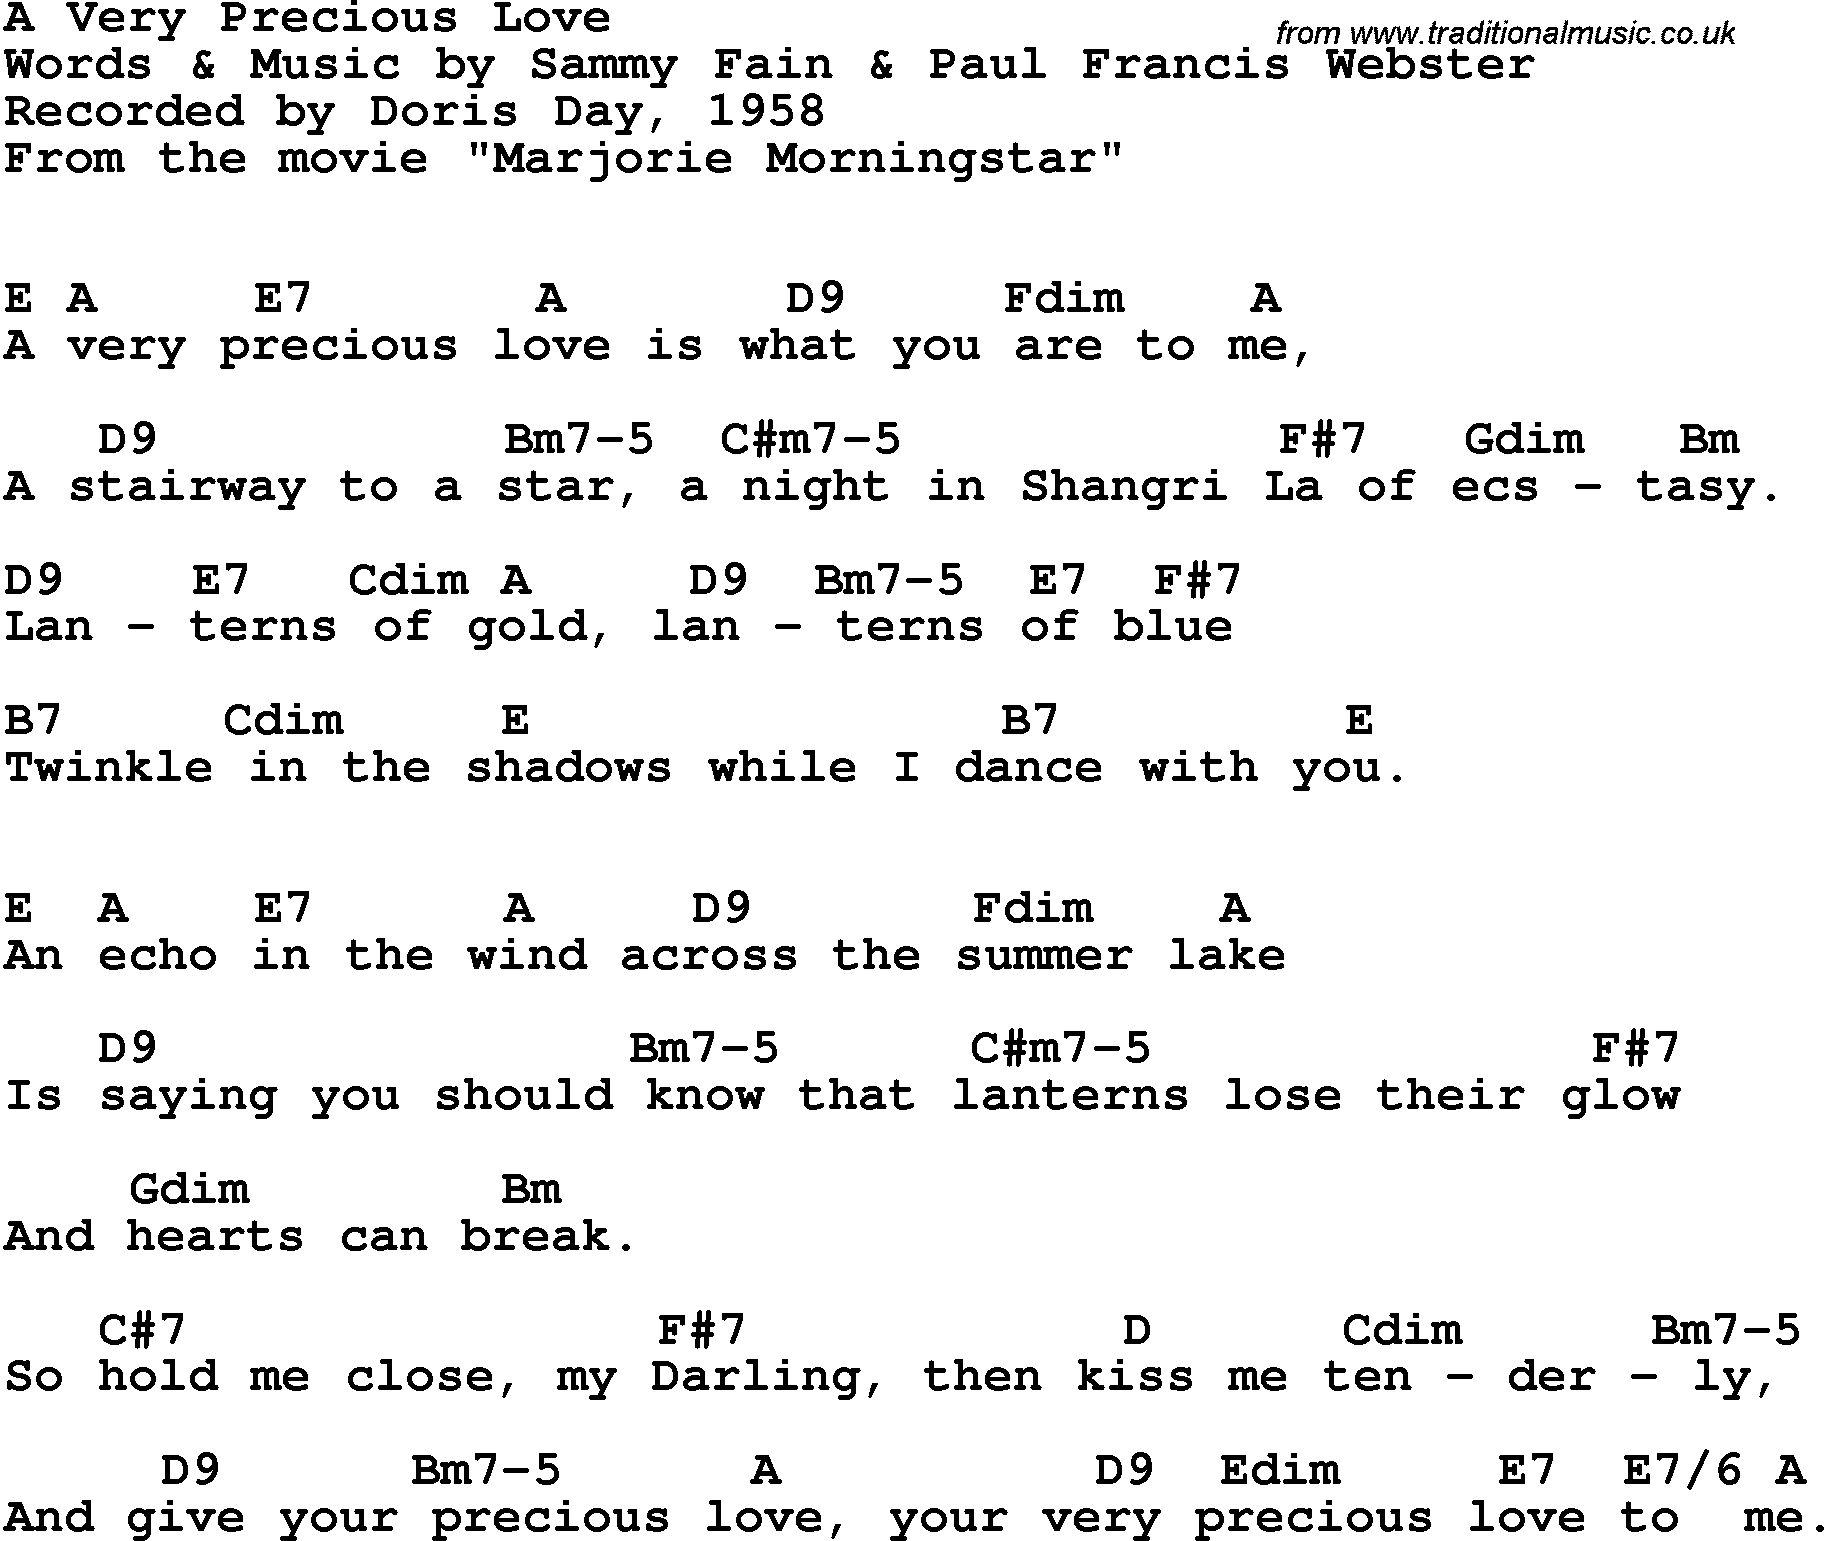 Song Lyrics with guitar chords for A Very Precious Love - Doris Day, 1958